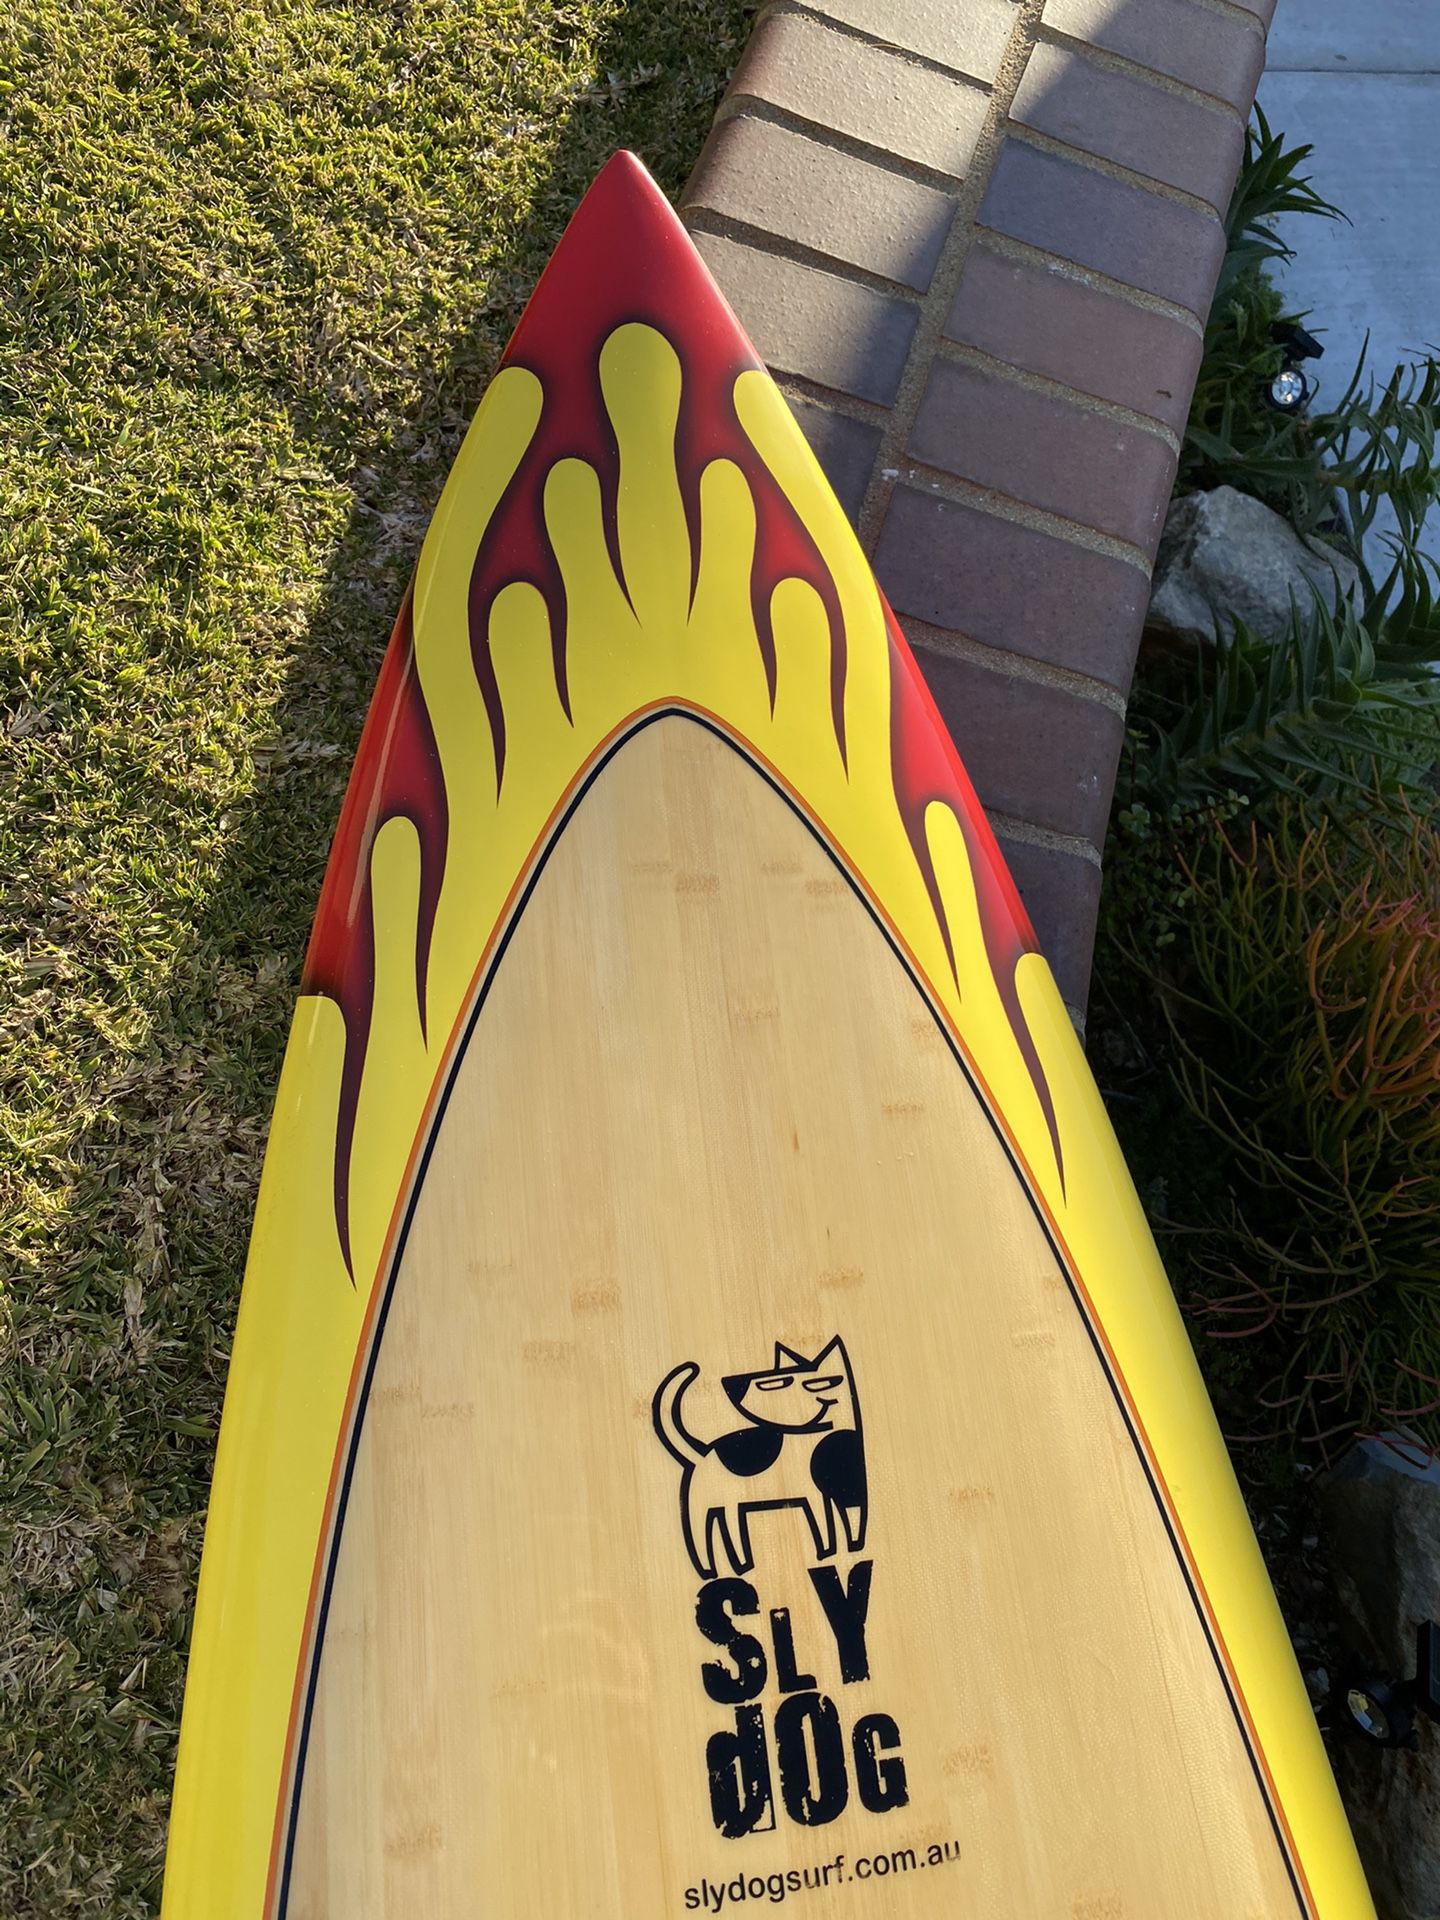 Sly Dog high performance surfboard